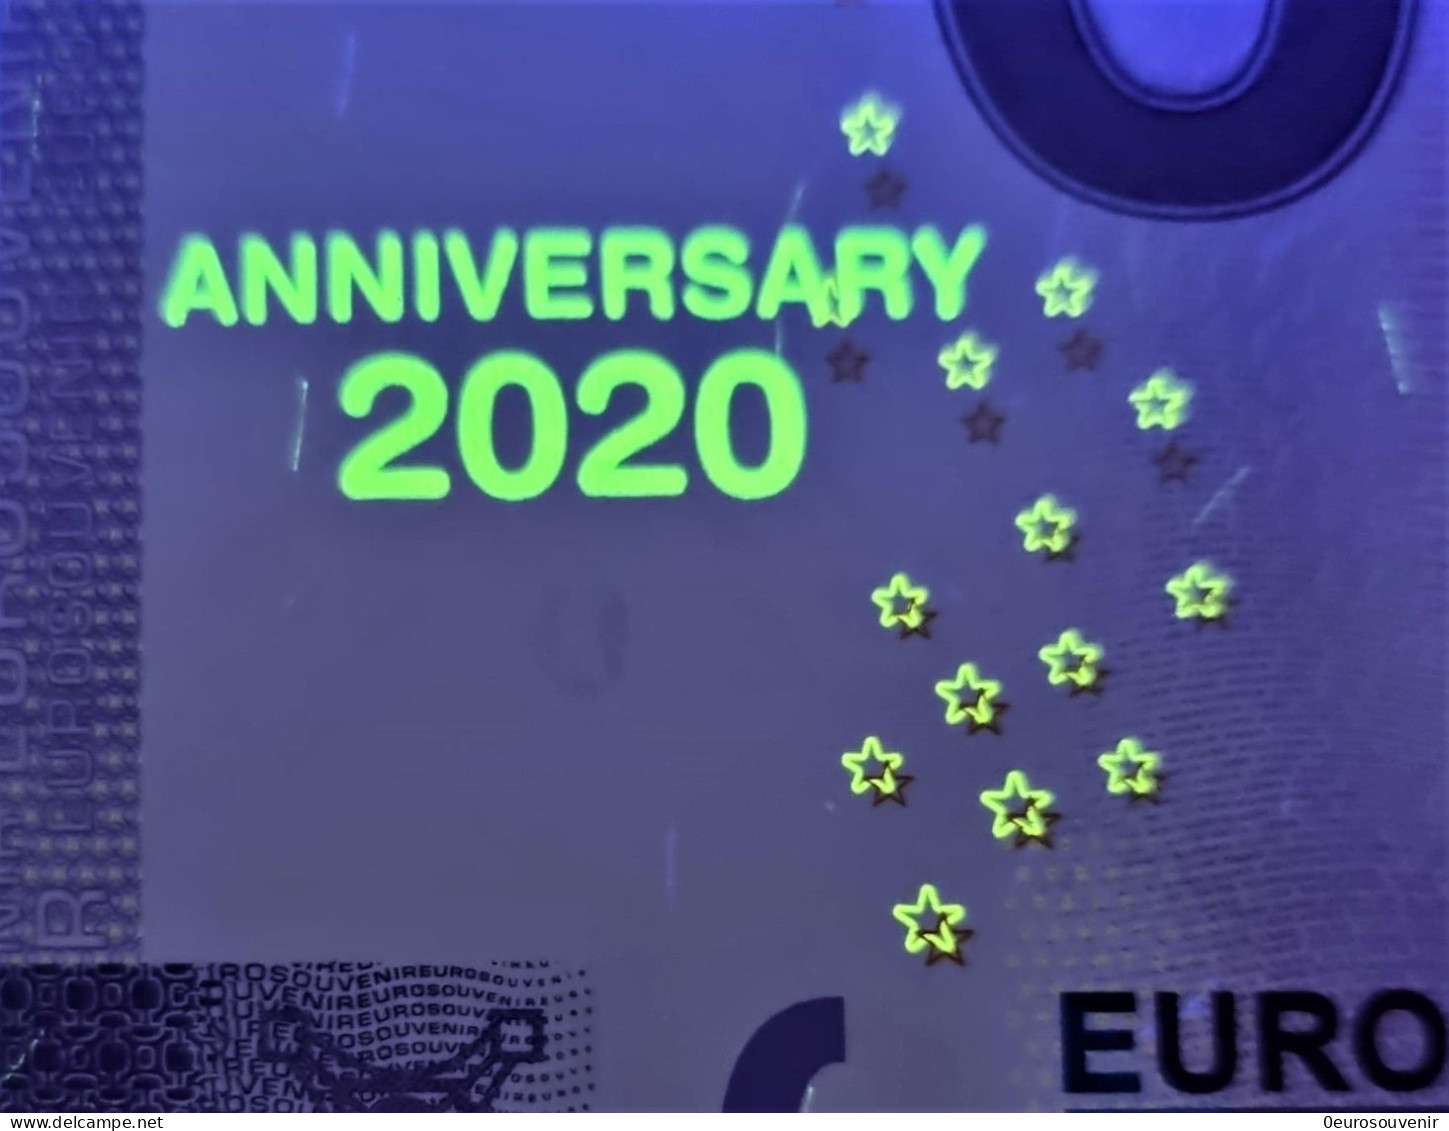 0-Euro XERW 01 2021 MÖNCHENGLADBACH Set NORMAL+ANNIVERSARY - Pruebas Privadas